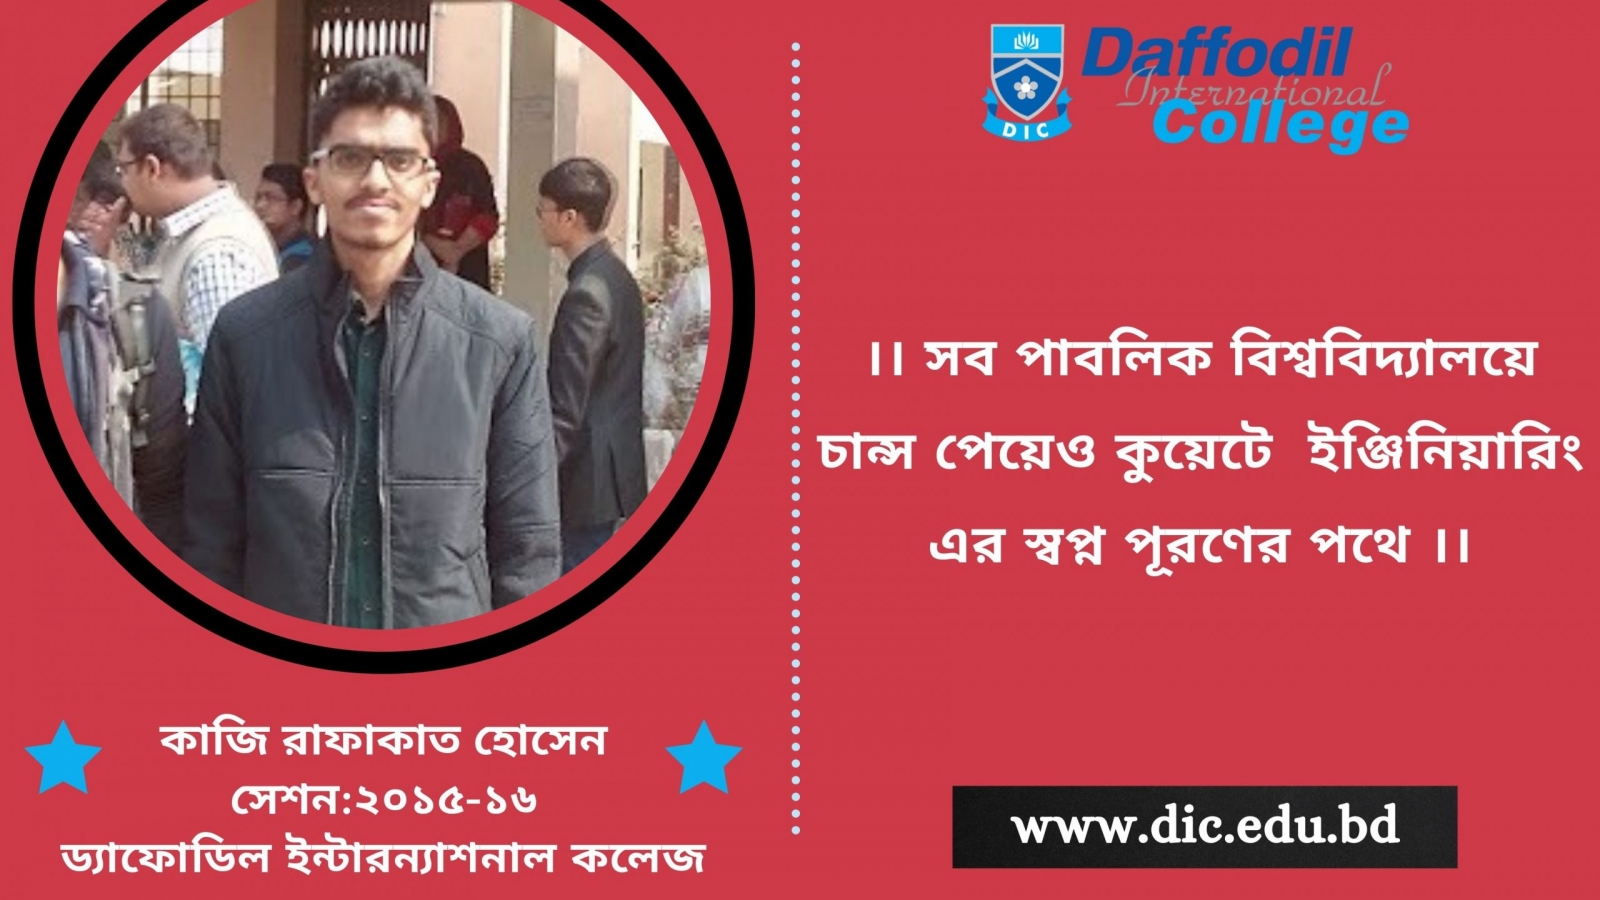 Daffodil College Alumni student Kazi Rafakat Hasan